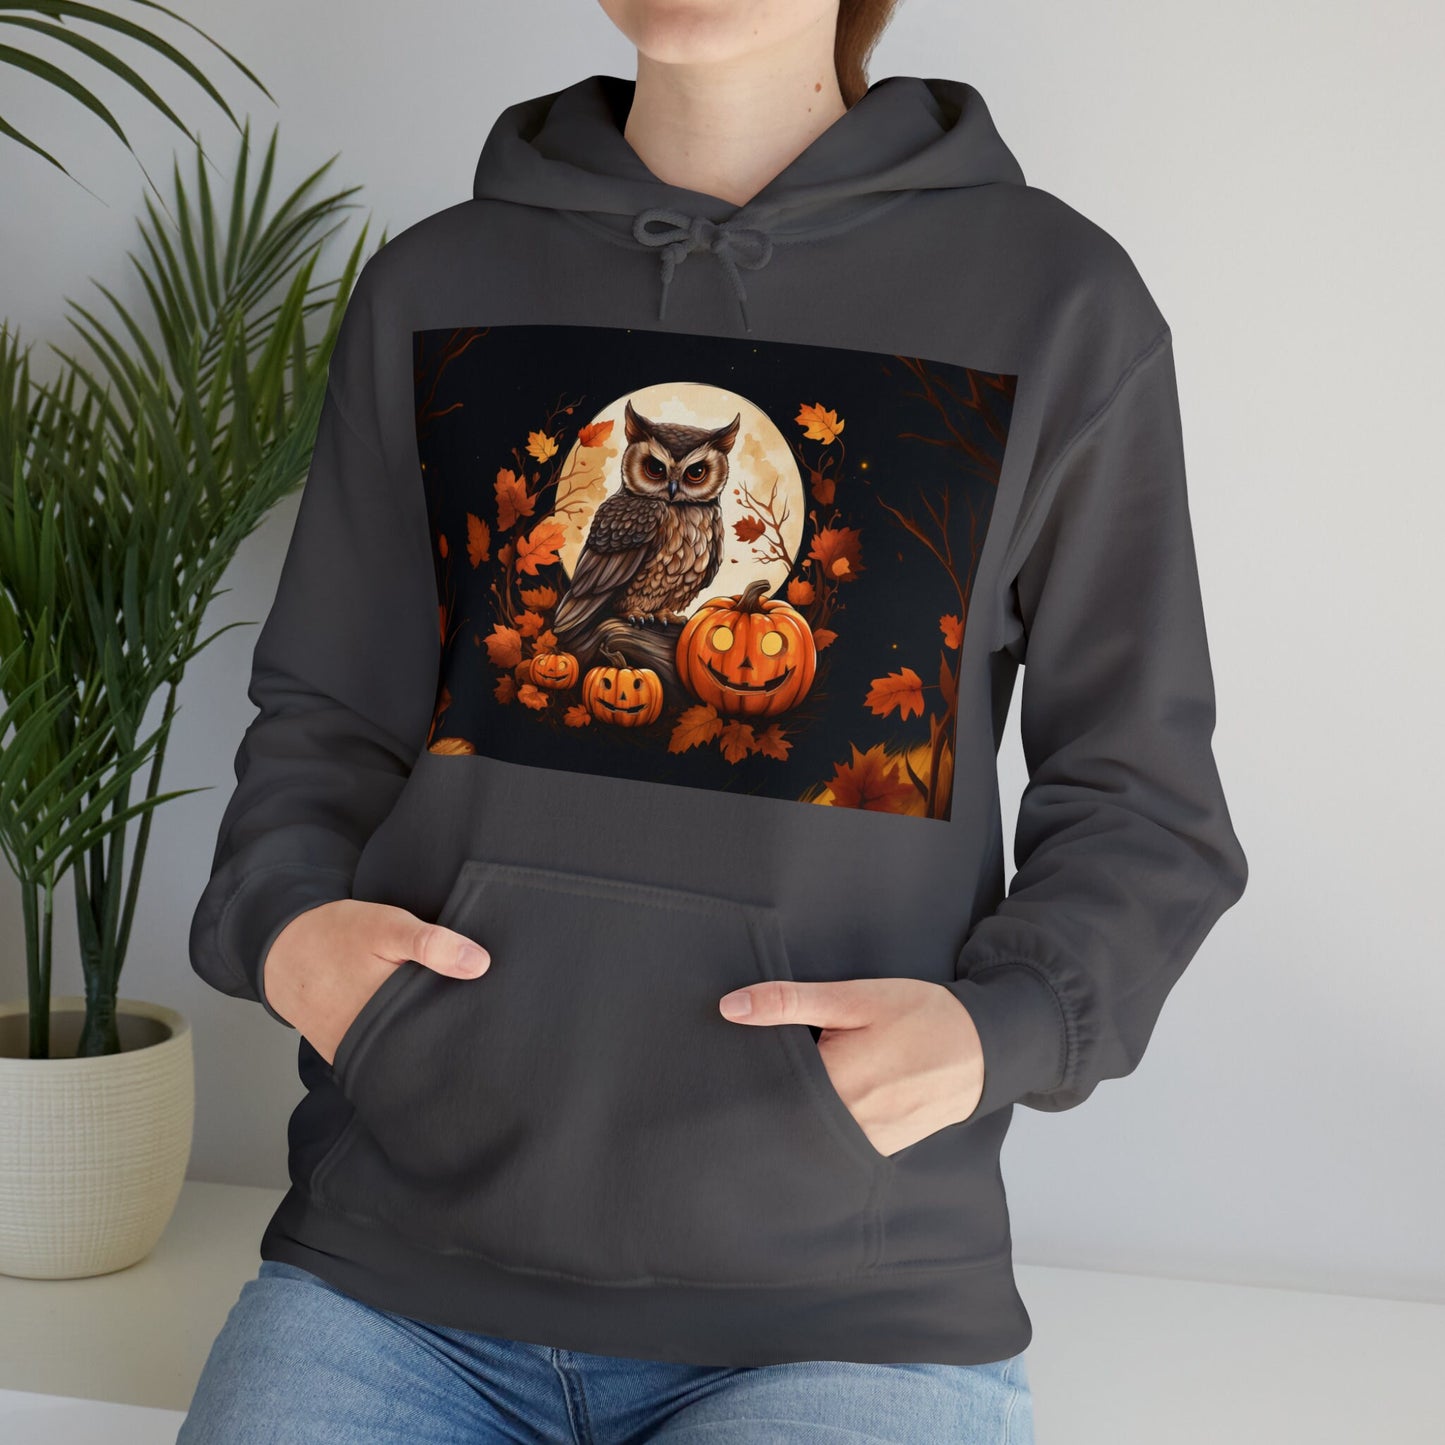 Owl and Pumpkin Halloween Hoodie Men's Women's Black Grey White Small Medium Large XL XXL XXL Halloween Hooded Sweatshirts